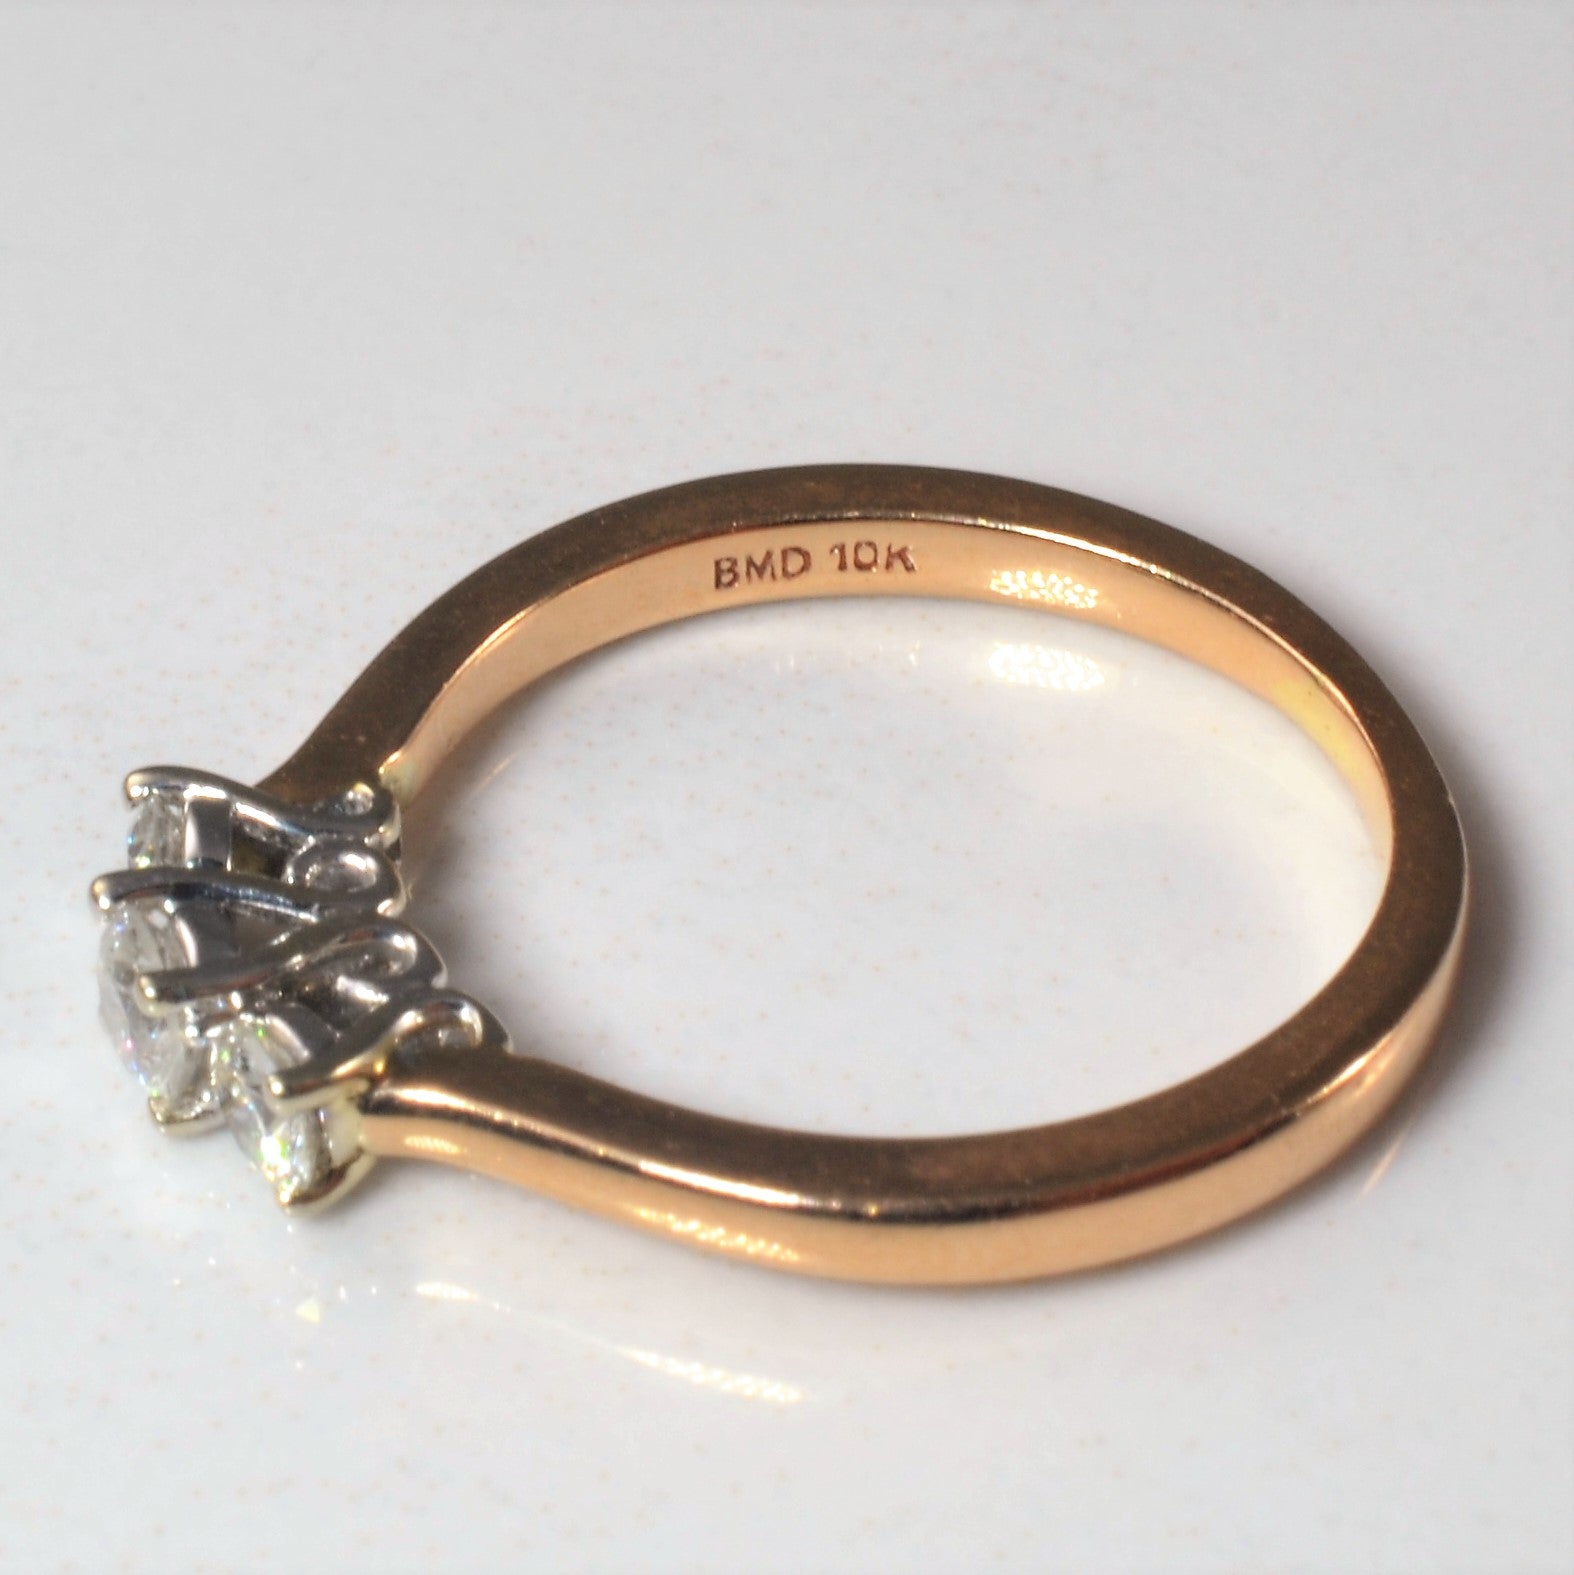 Rose Gold Three Stone Diamond Ring | 0.29ctw | SZ 5.5 |